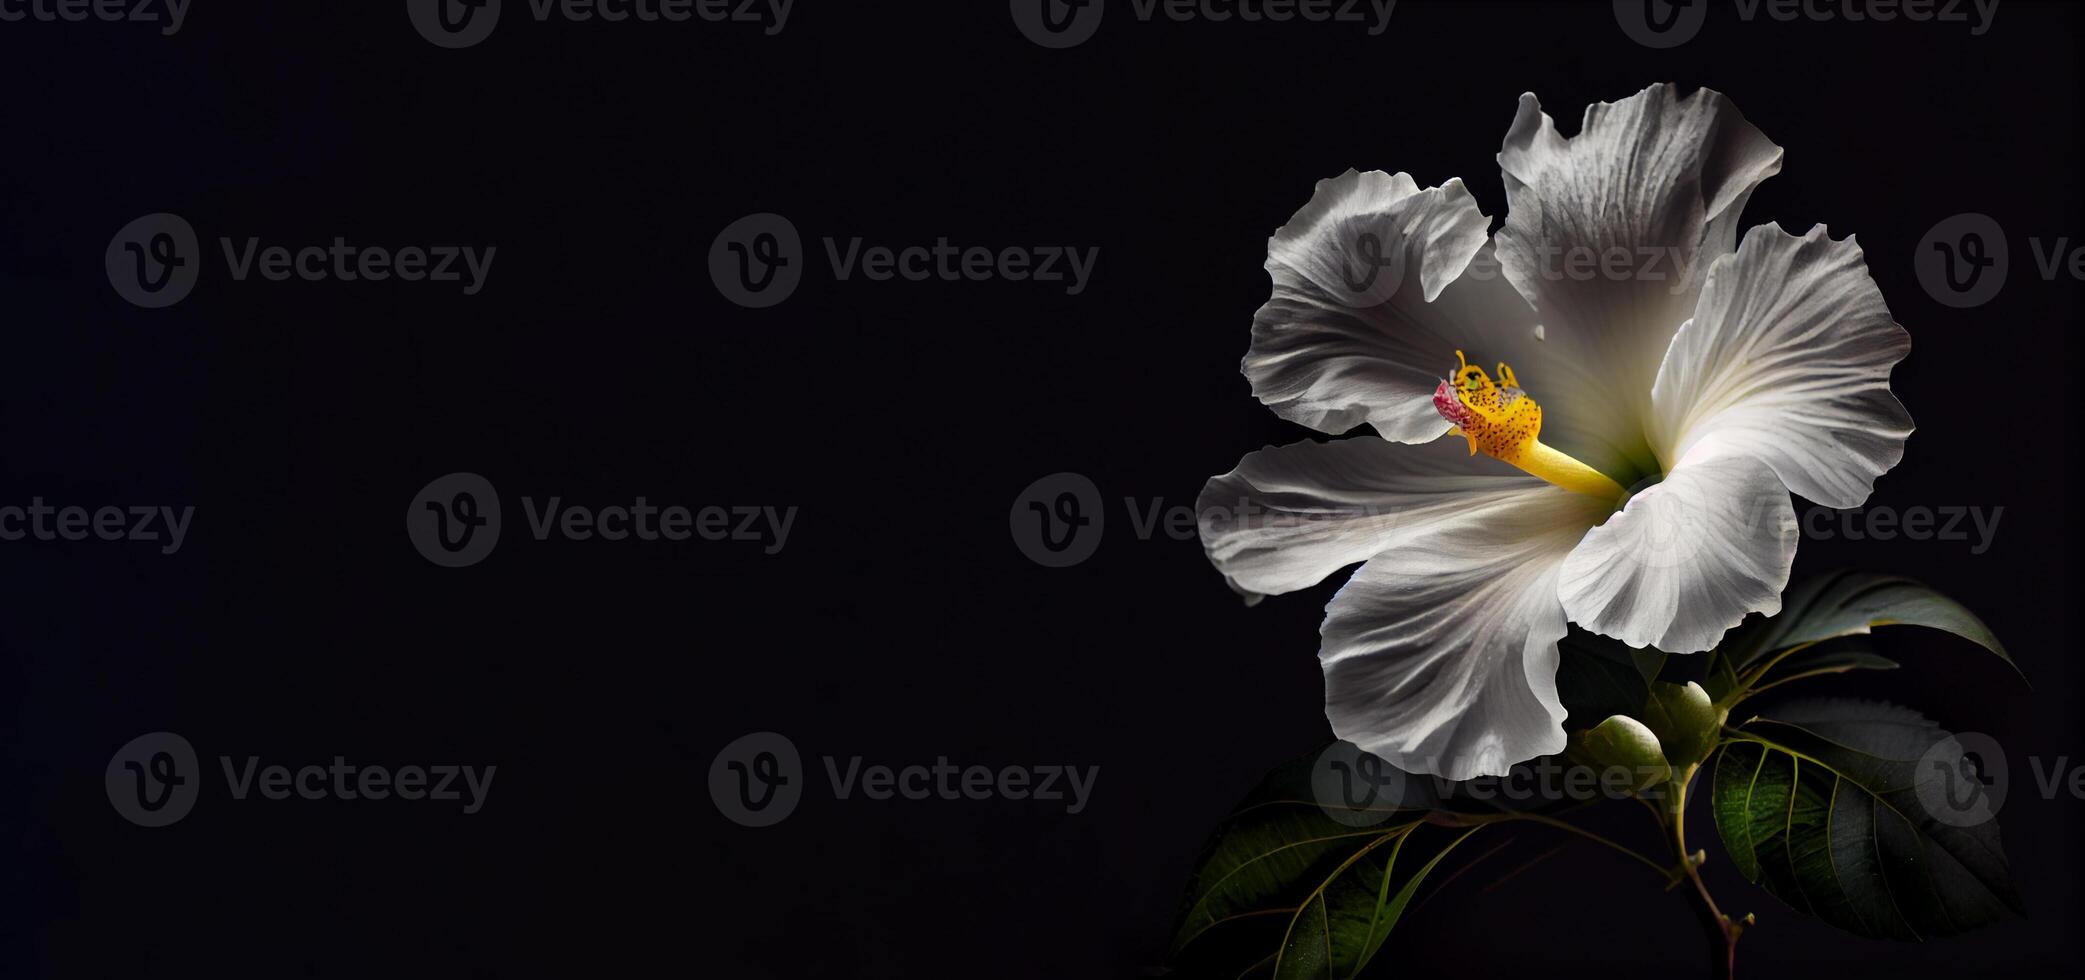 oscuro blanco hibisco flor en negro antecedentes ai generado foto